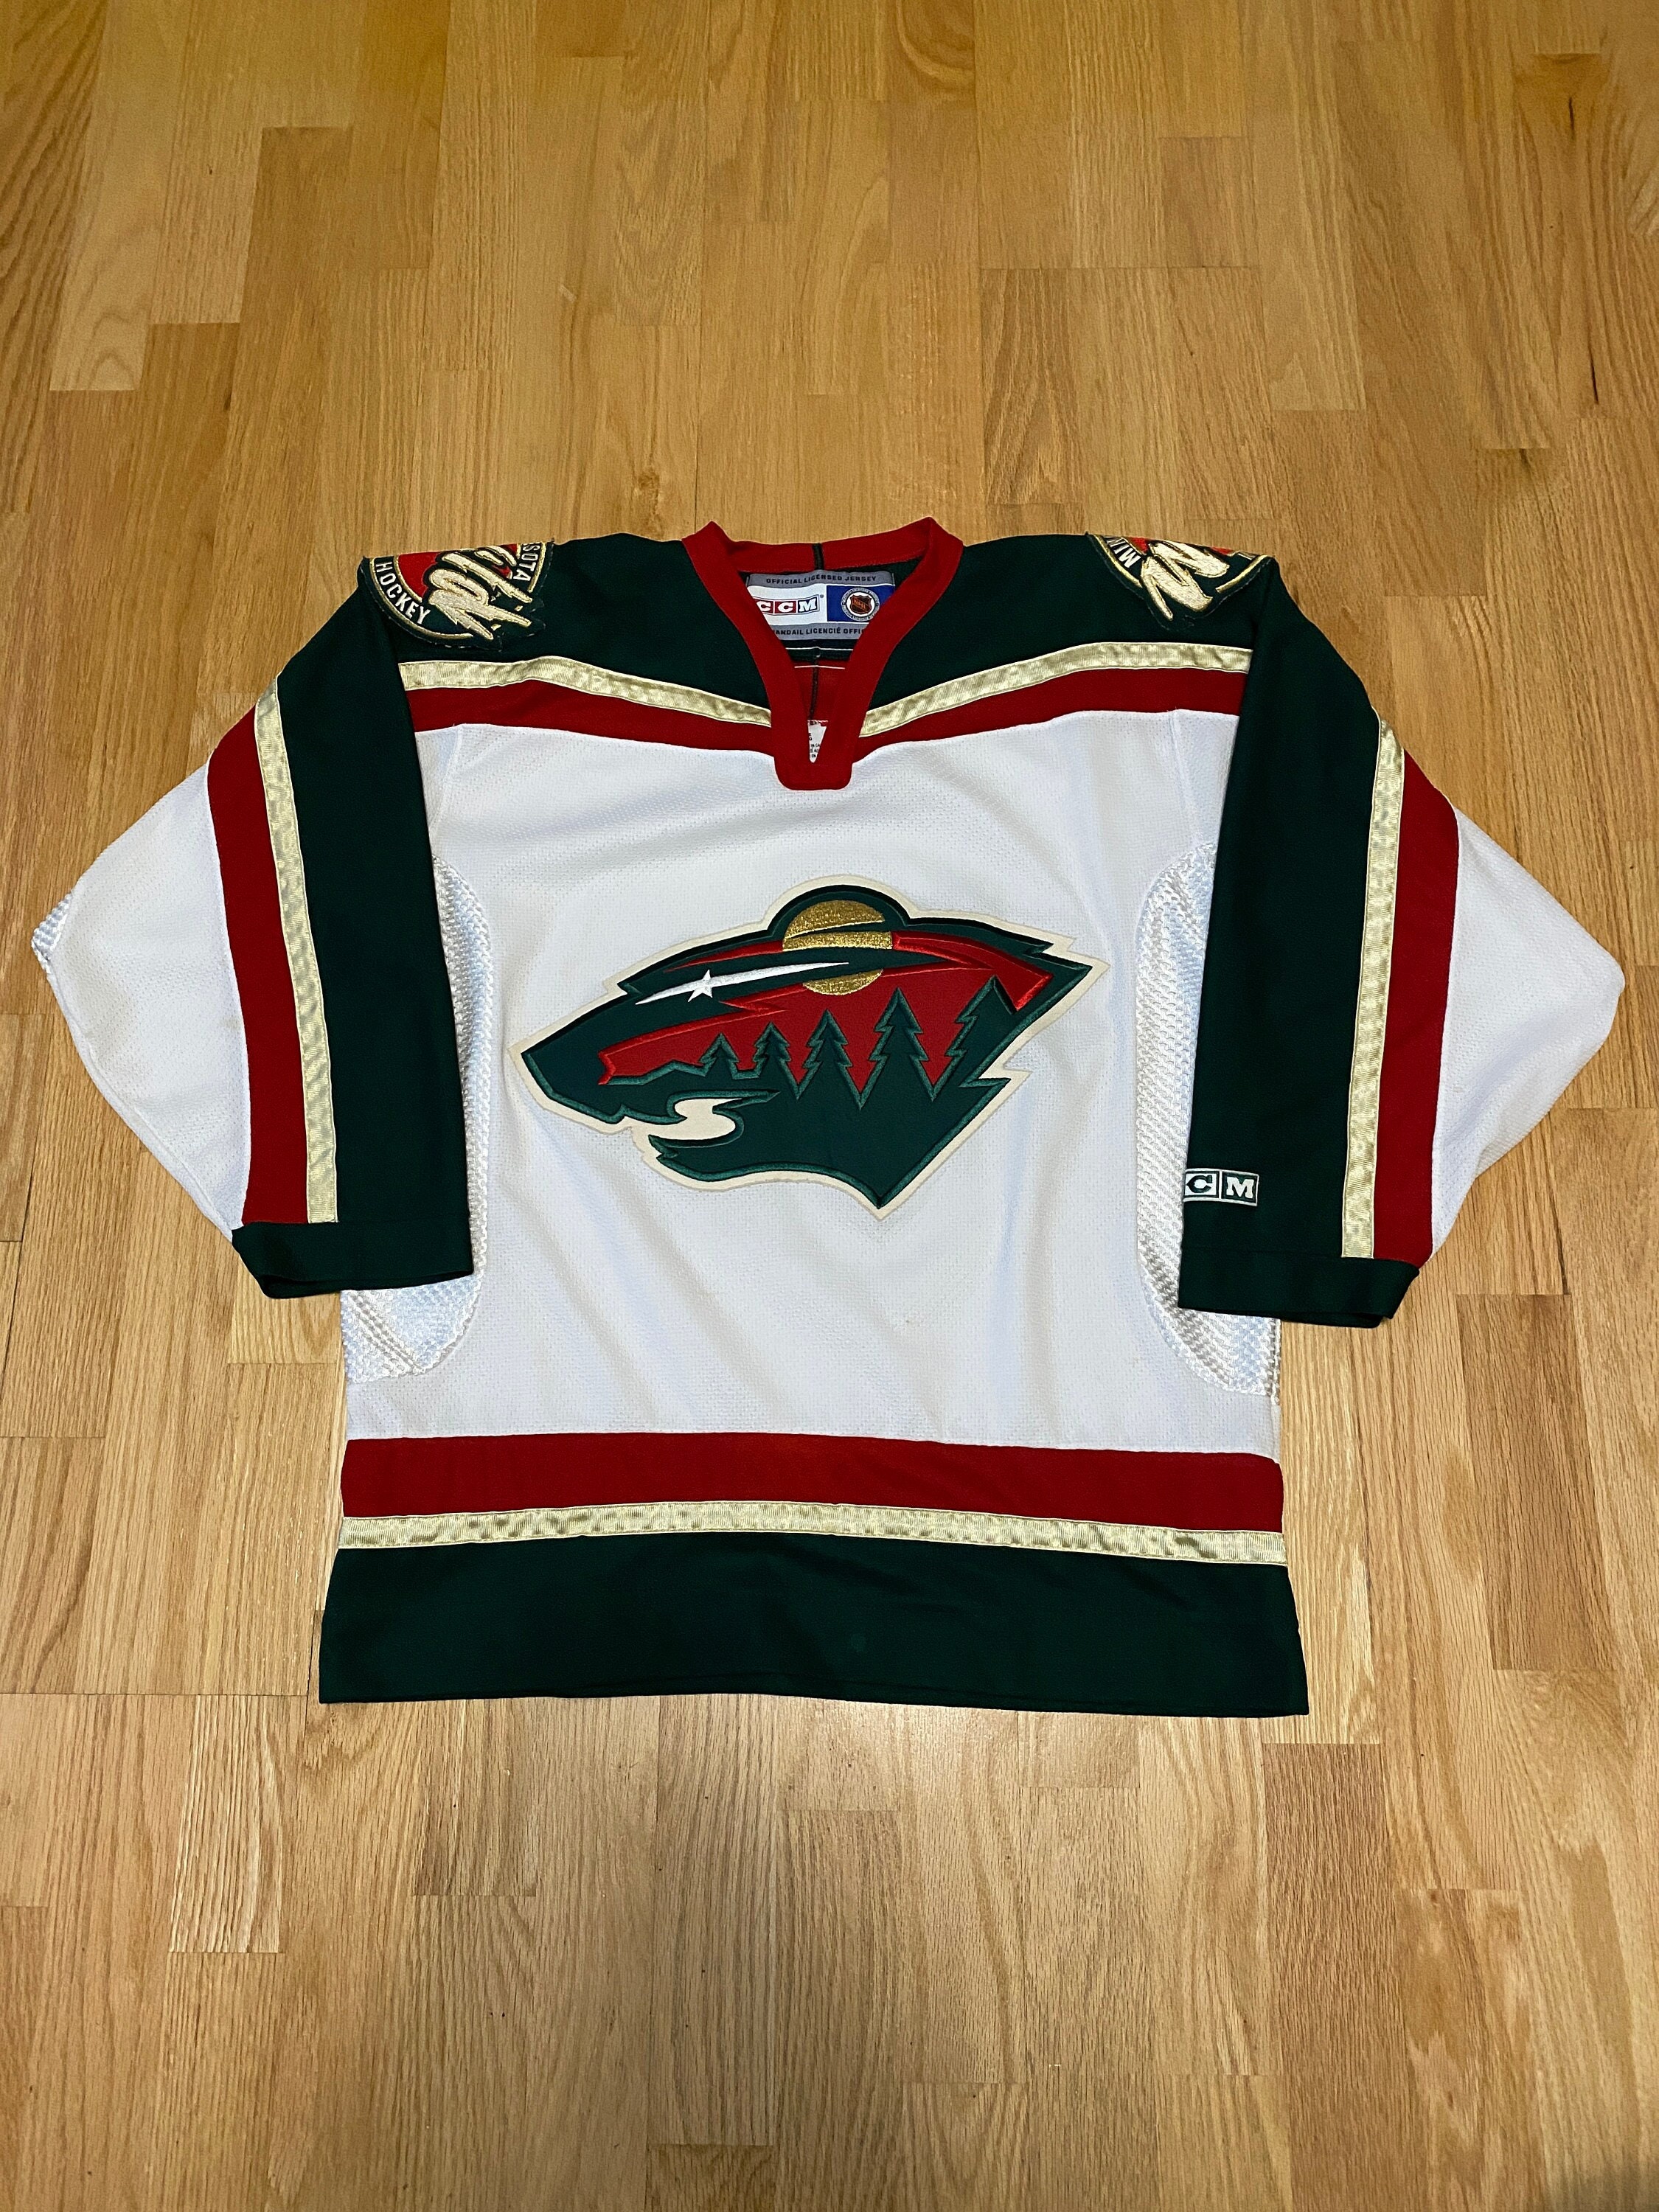 Men's Minnesota Wild Replica Jersey Officially Licensed NHL Brand